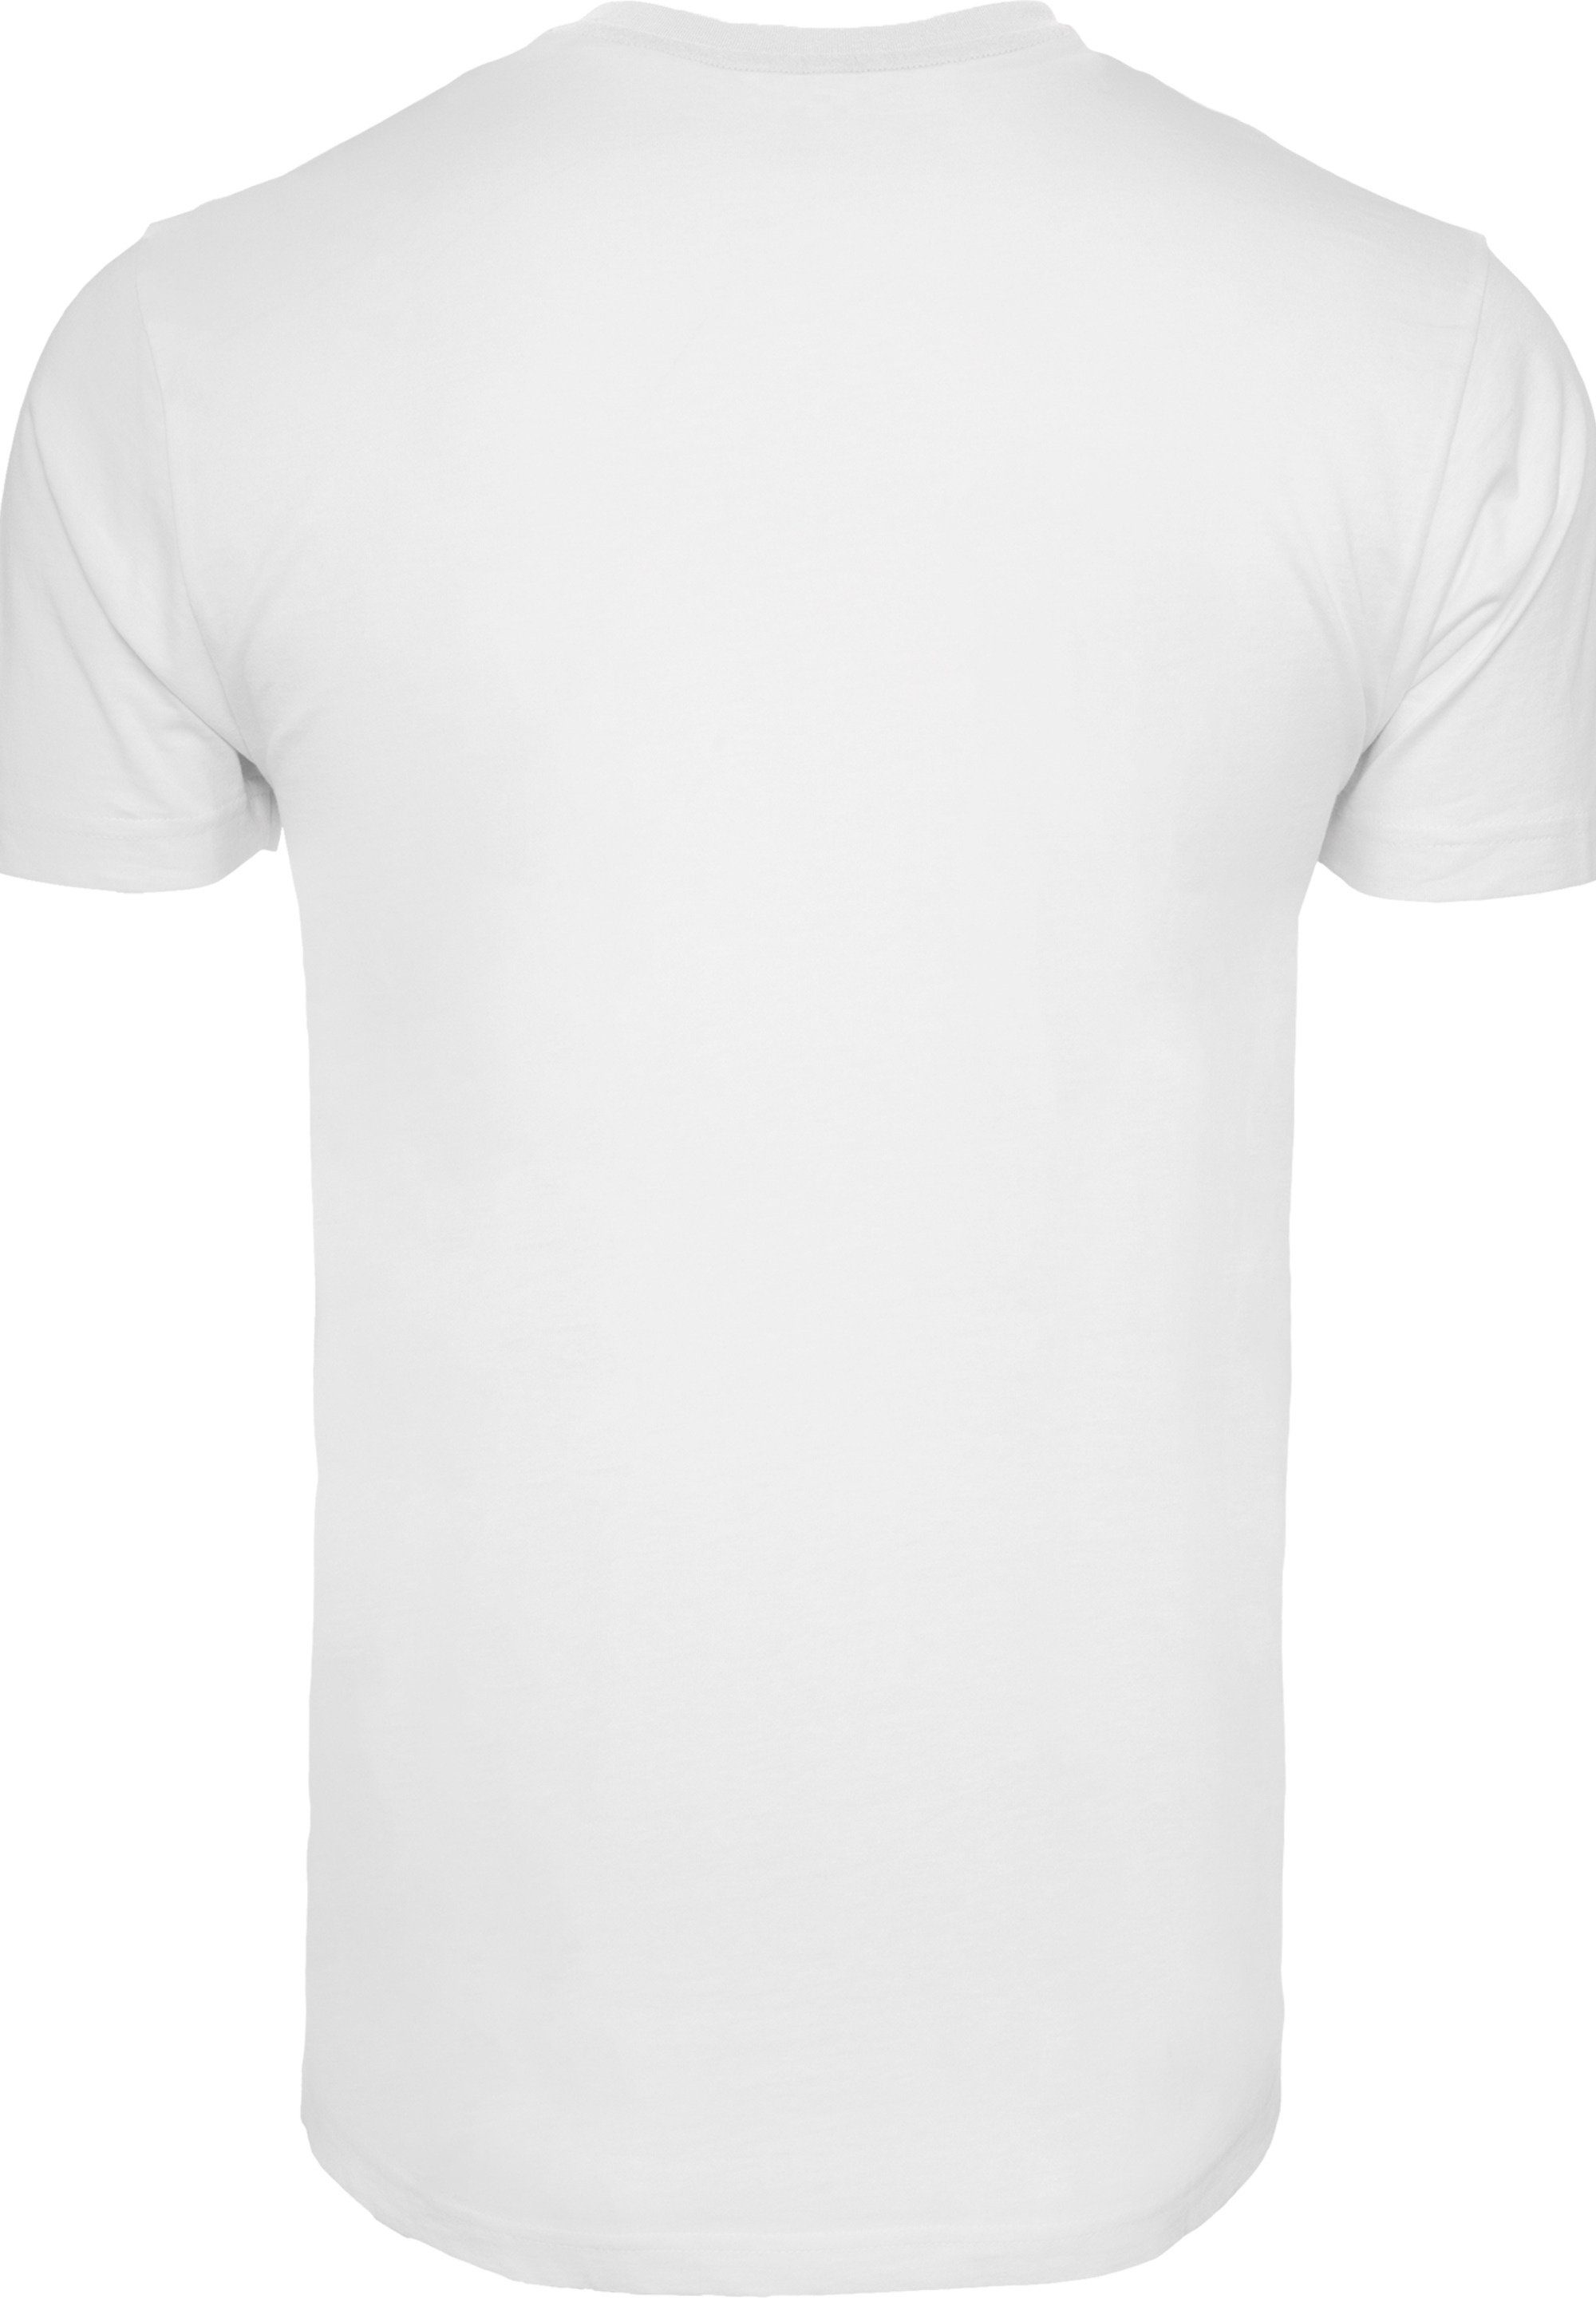 Herren,Premium Shuttle Space T-Shirt NASA Merch,Regular-Fit,Basic,Bedruckt F4NT4STIC White Classic